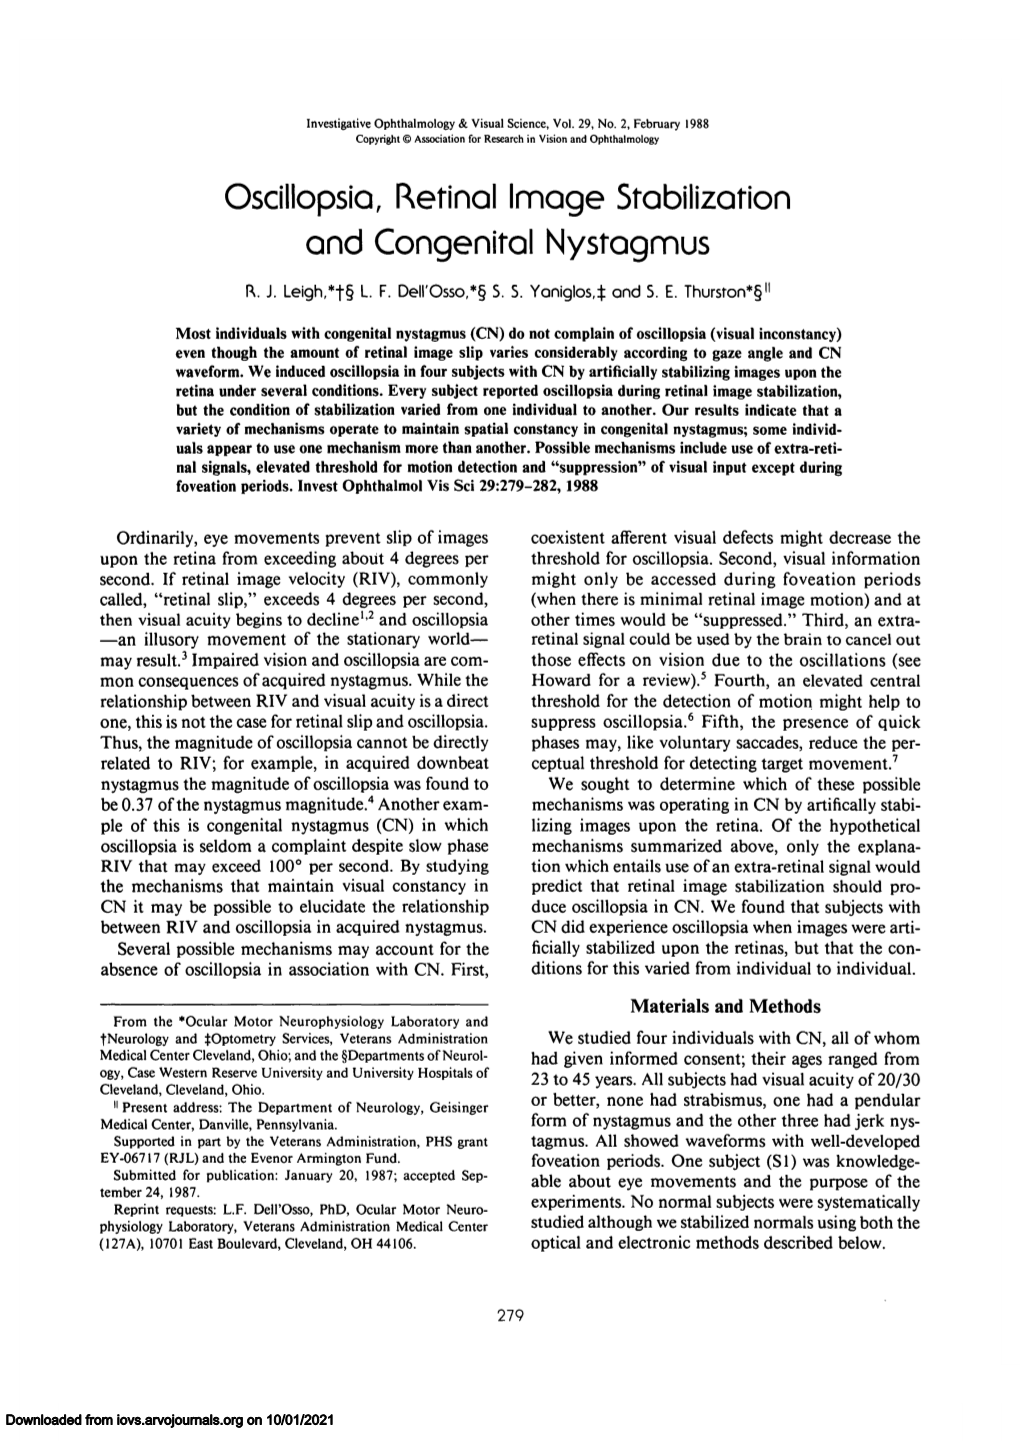 Oscillopsia, Retinal Image Stabilization and Congenital Nystagmus